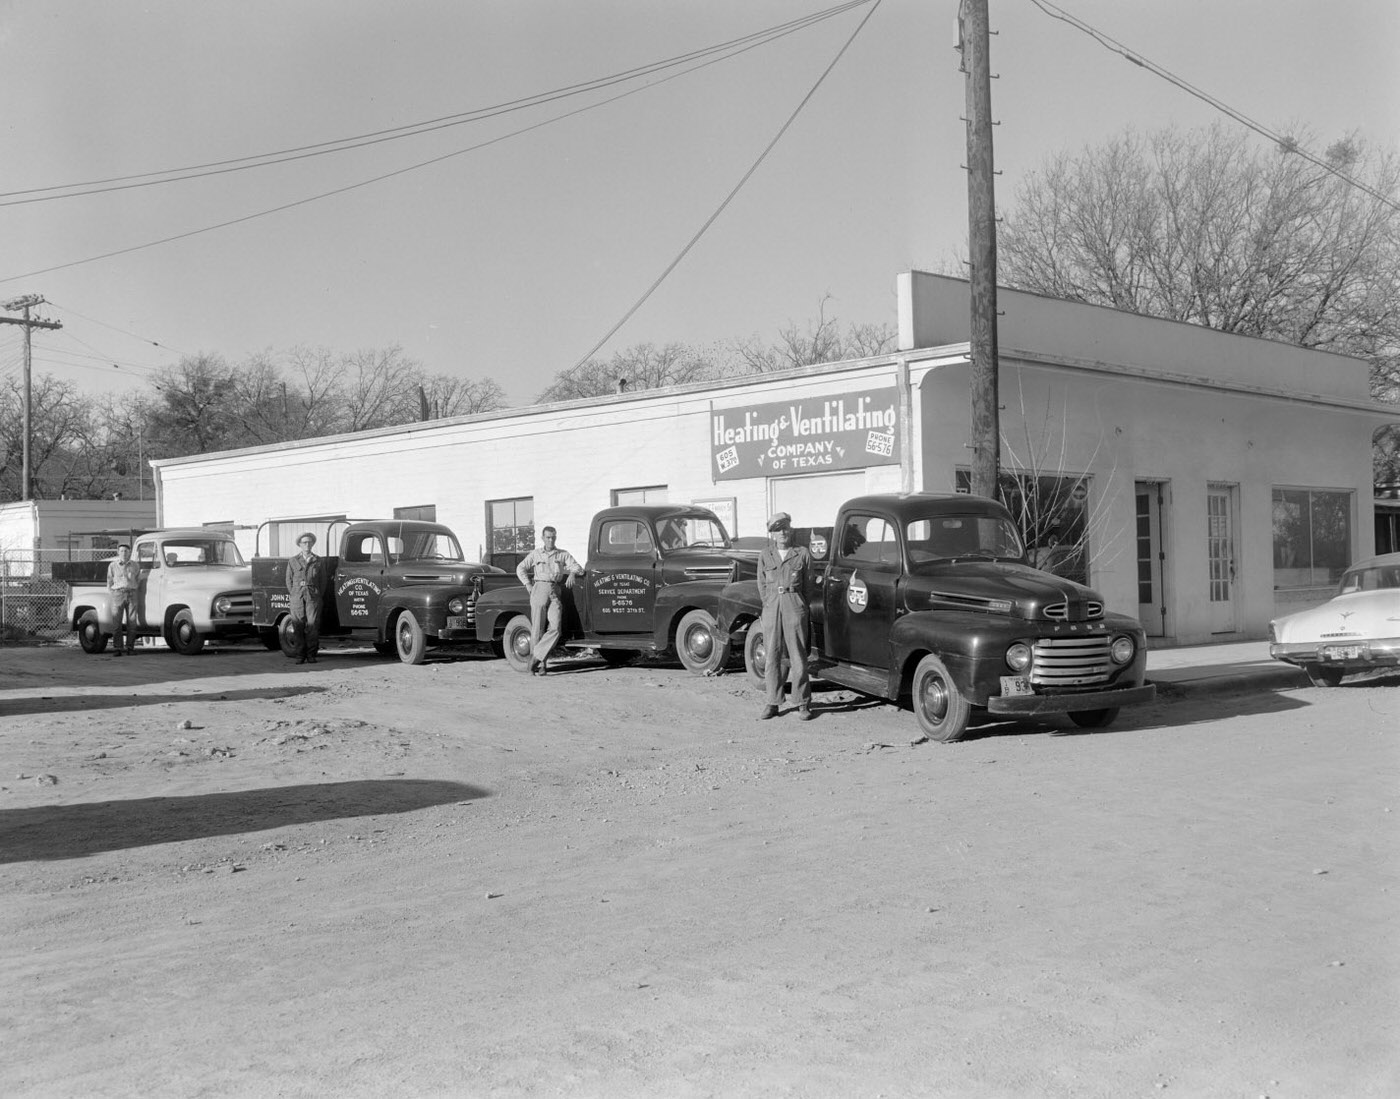 Men Next to Trucks at Texas Heating and Ventilating Company, 1954.